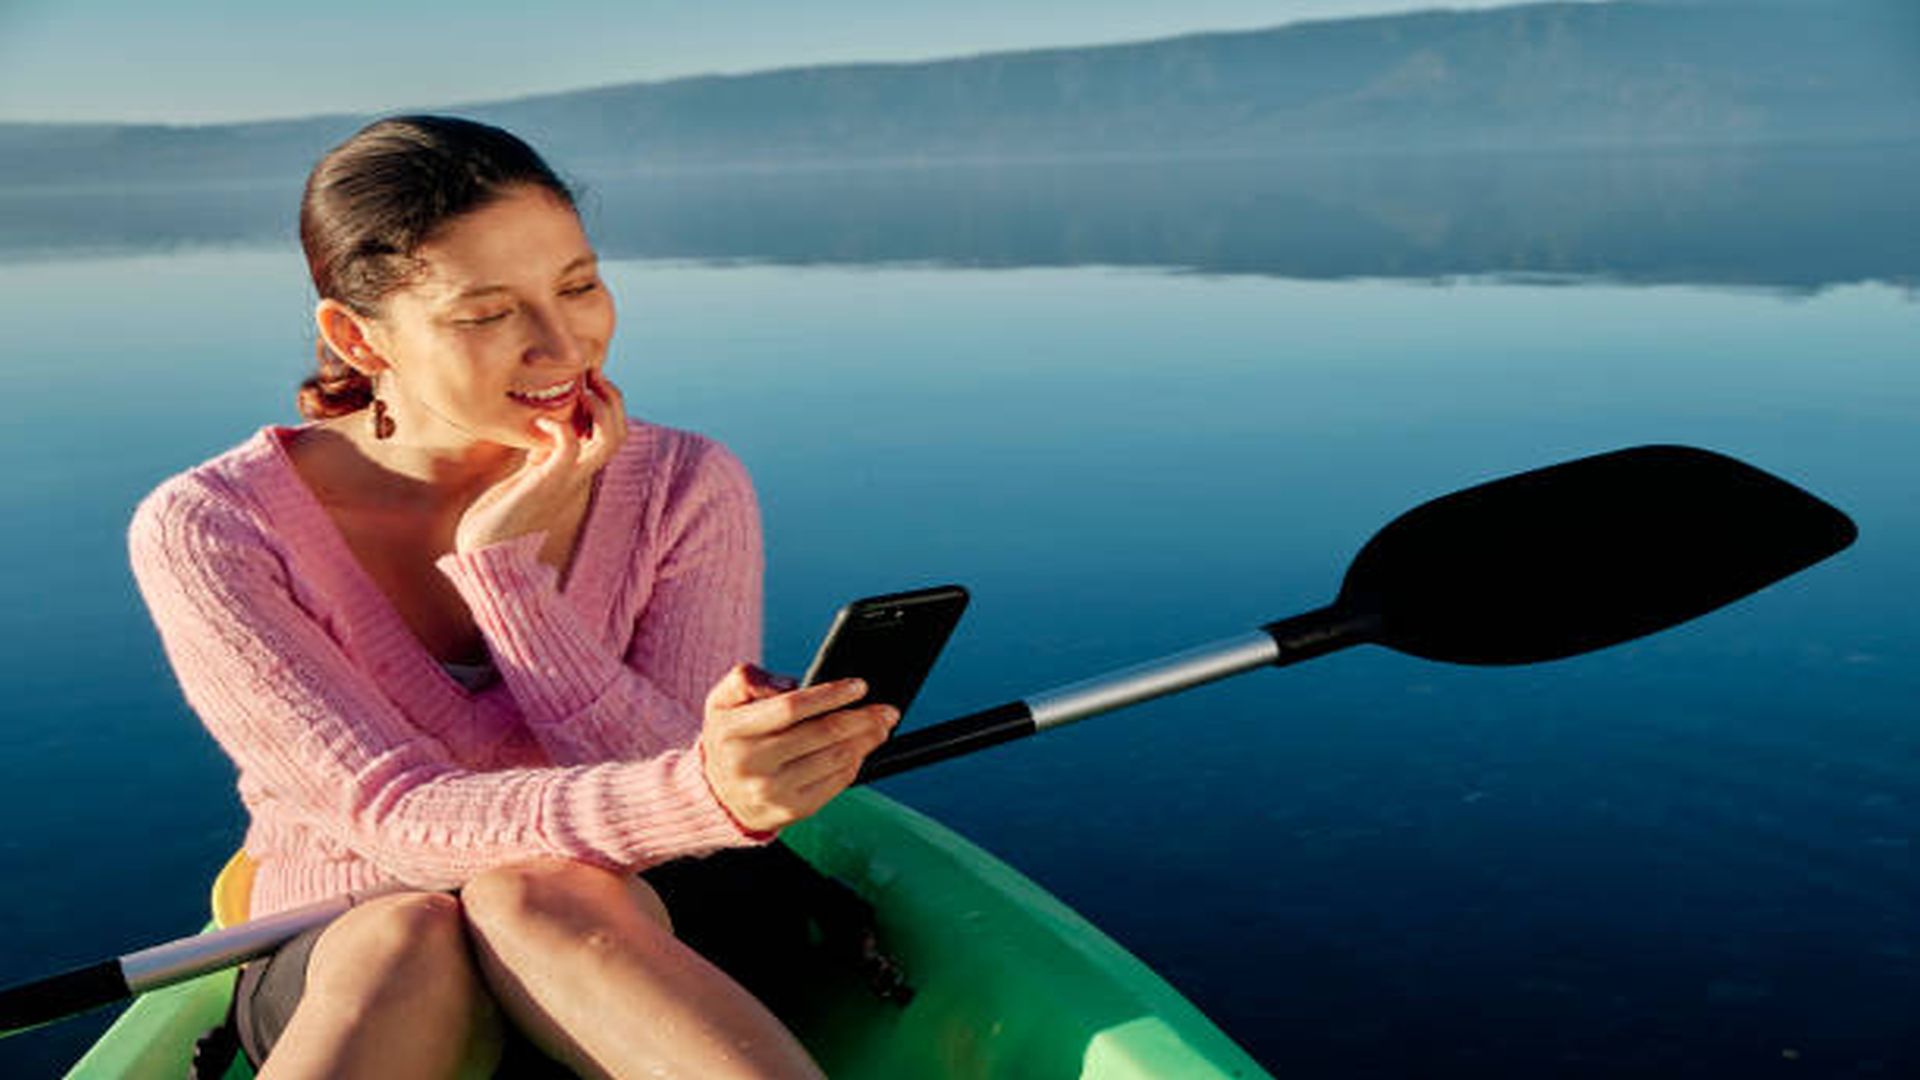 kayaking with phone